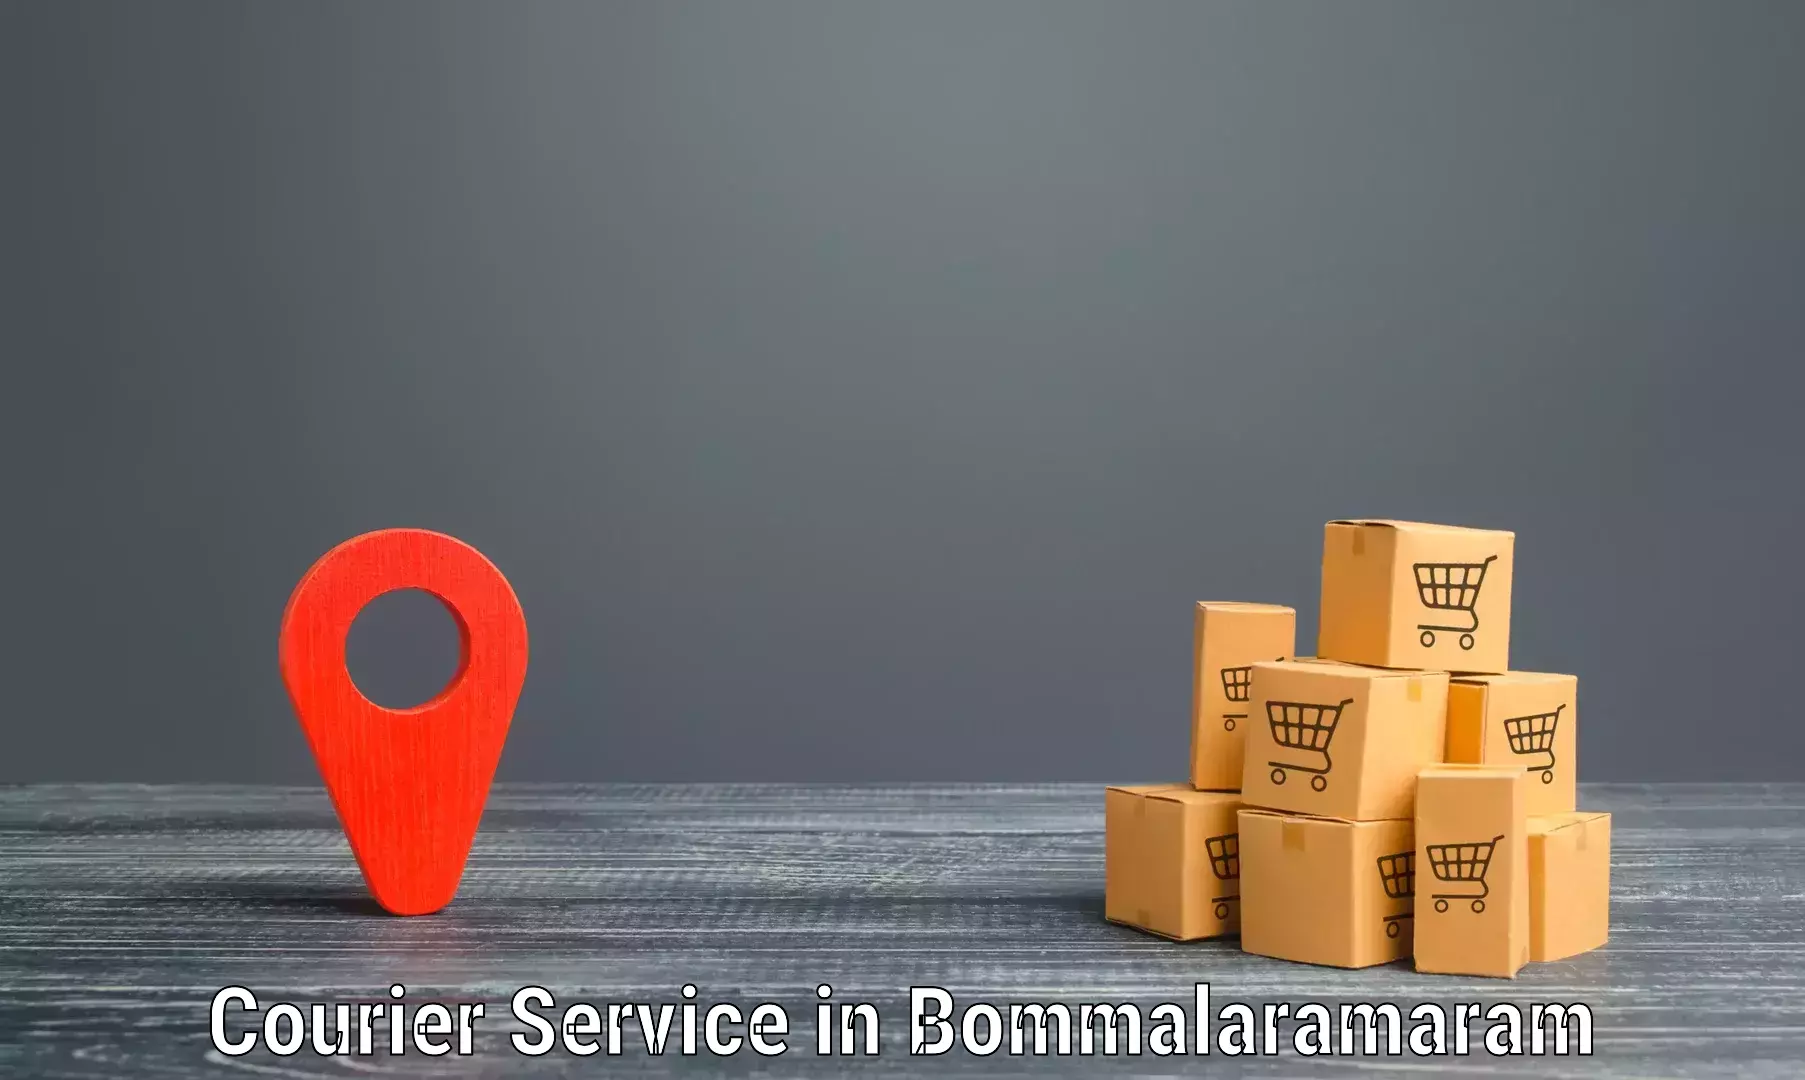 Logistics solutions in Bommalaramaram